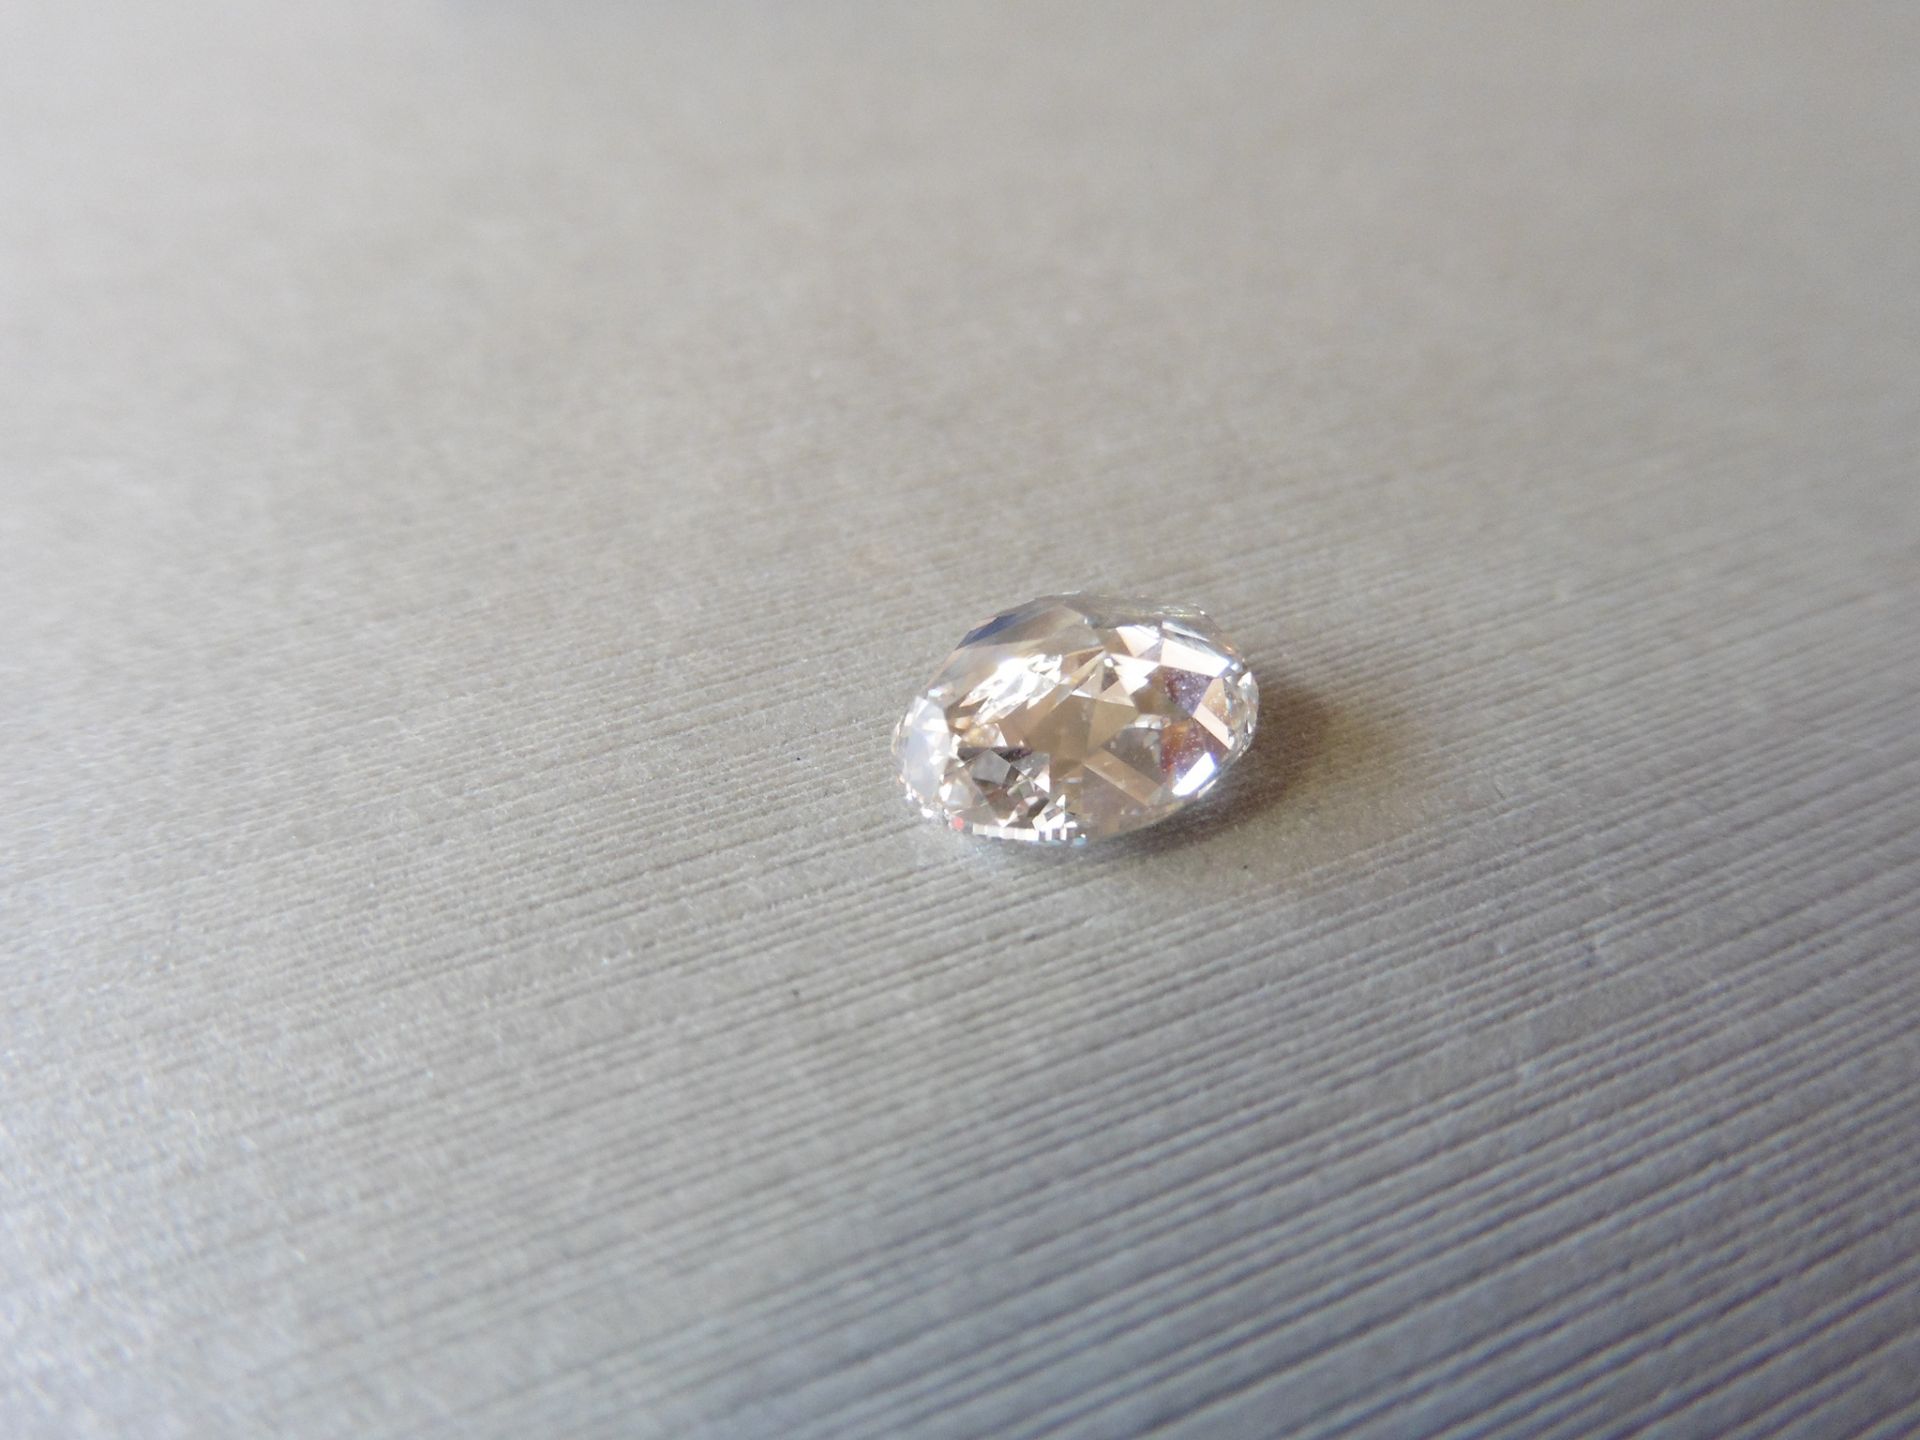 2.21ct loose oval cut diamond. M colour, VS2 clarity. 9.02 x 6.79 x 4.35mm. GIA cert – 6212135741. - Image 4 of 8